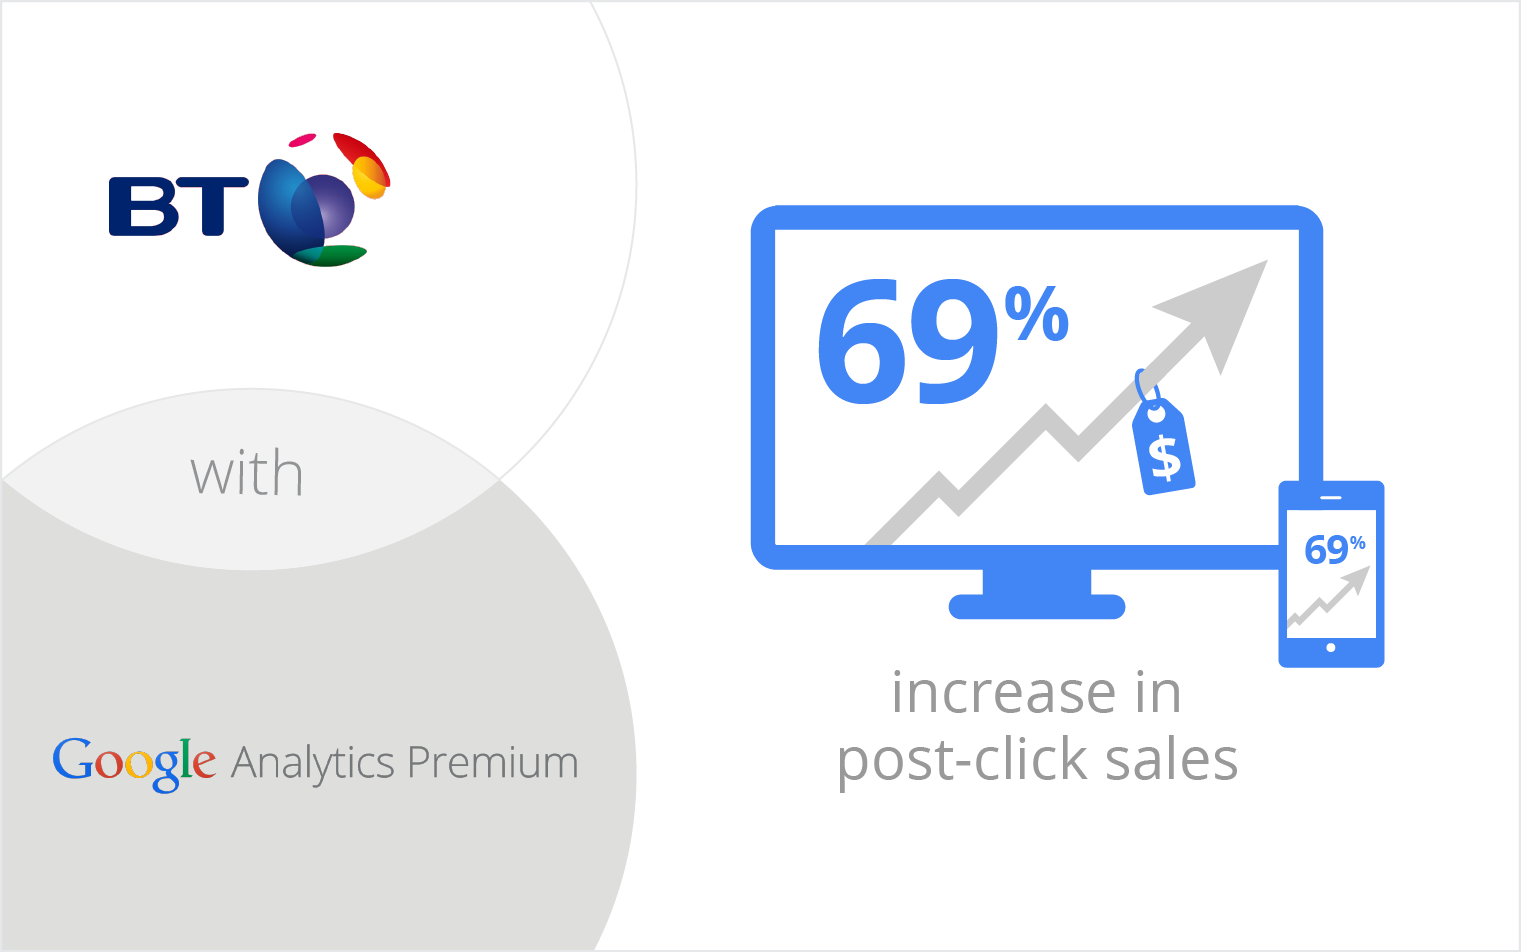 Google Analytics Solutions: BT Sales Volume Efficiency Using DoubleClick Bid Manager With Google Analytics Premium